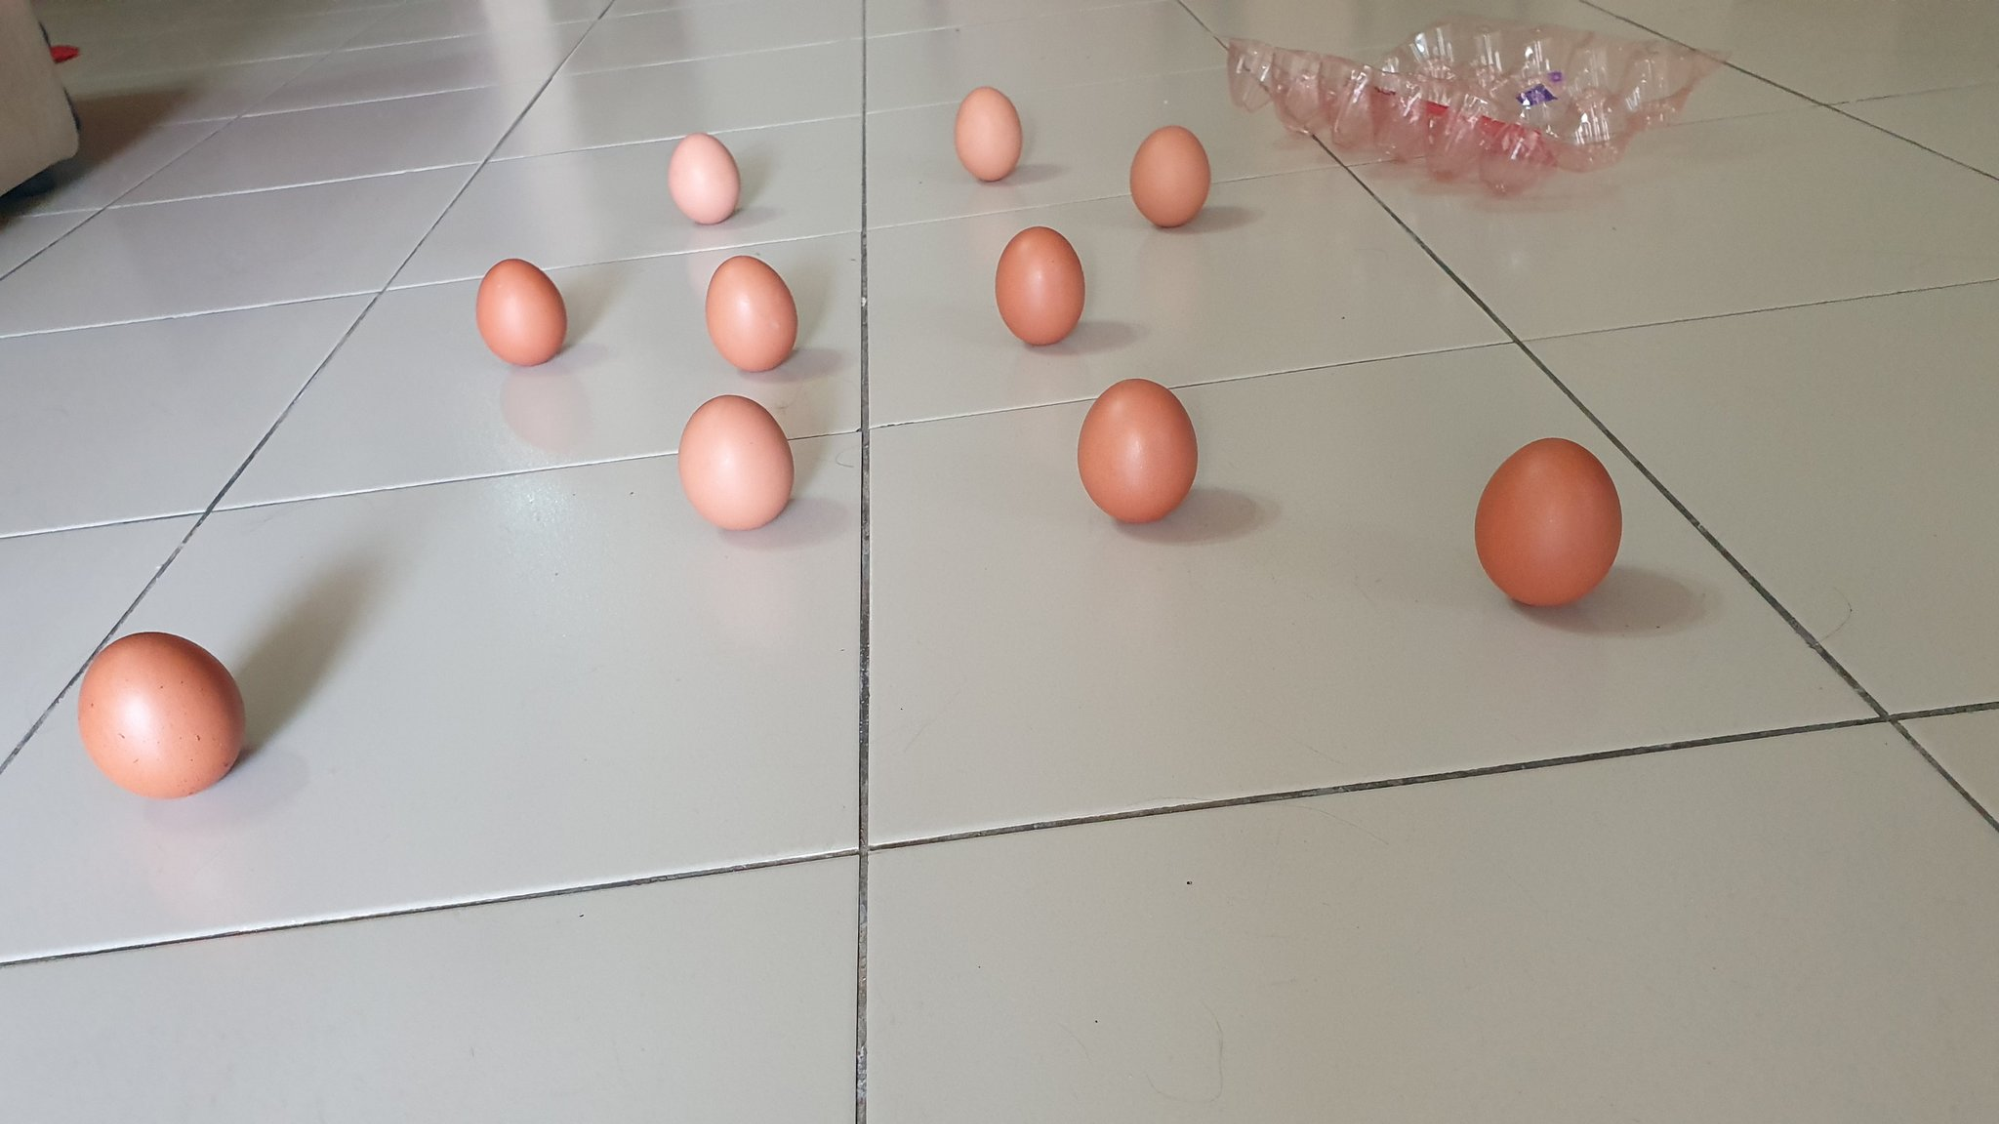 Balancing eggs